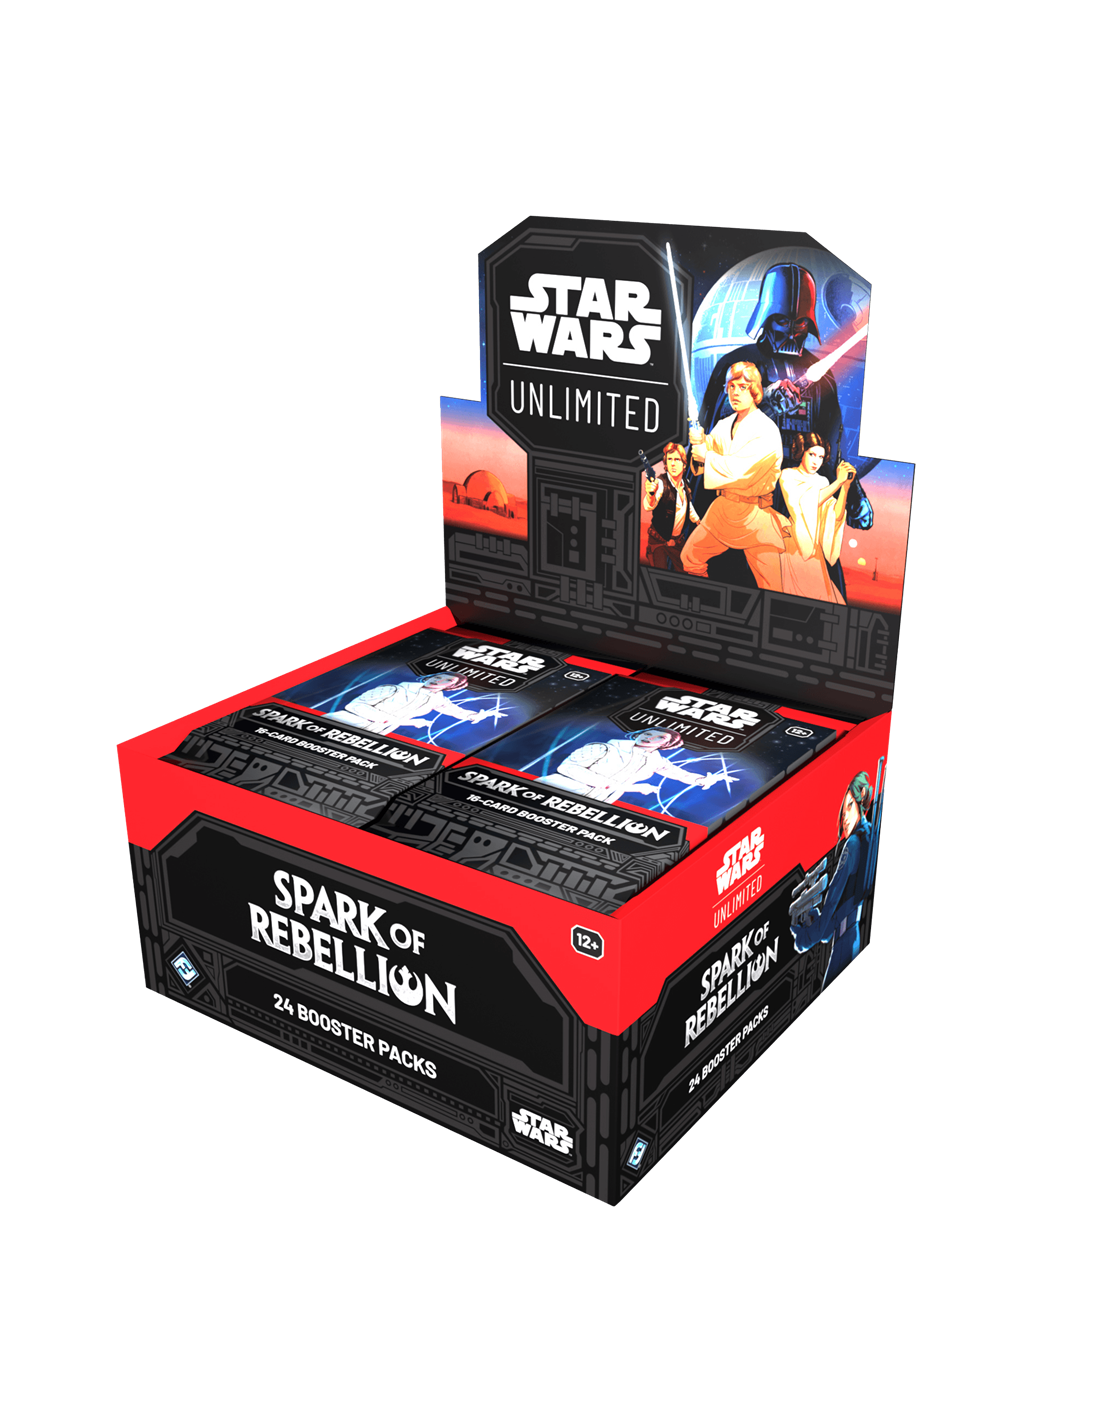 Star Wars: Unlimited - Spark of Rebellion Booster Display (24 Packs)